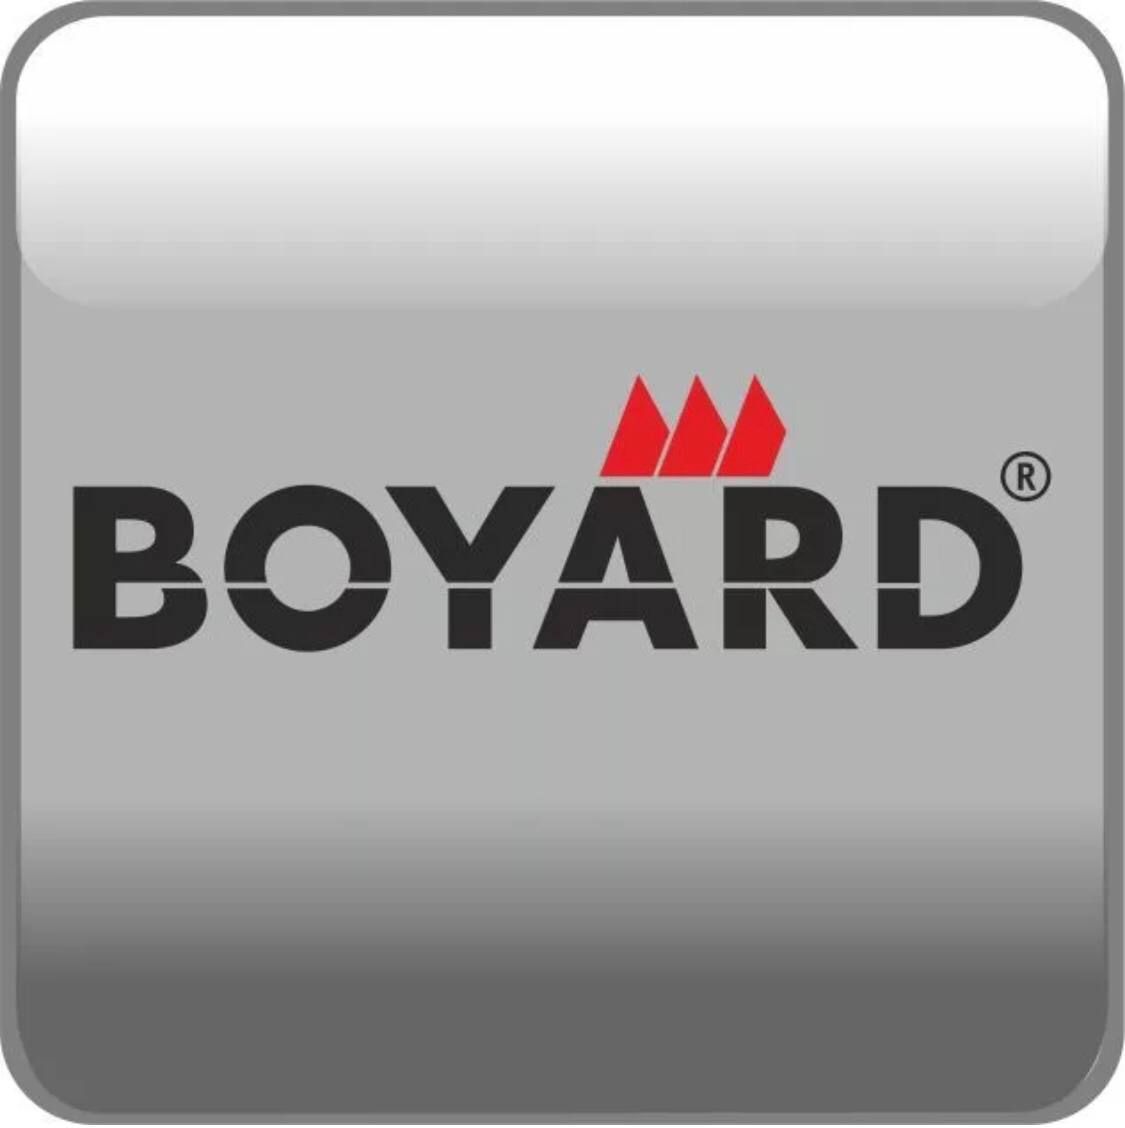 Boyard мебельная фурнитура logo